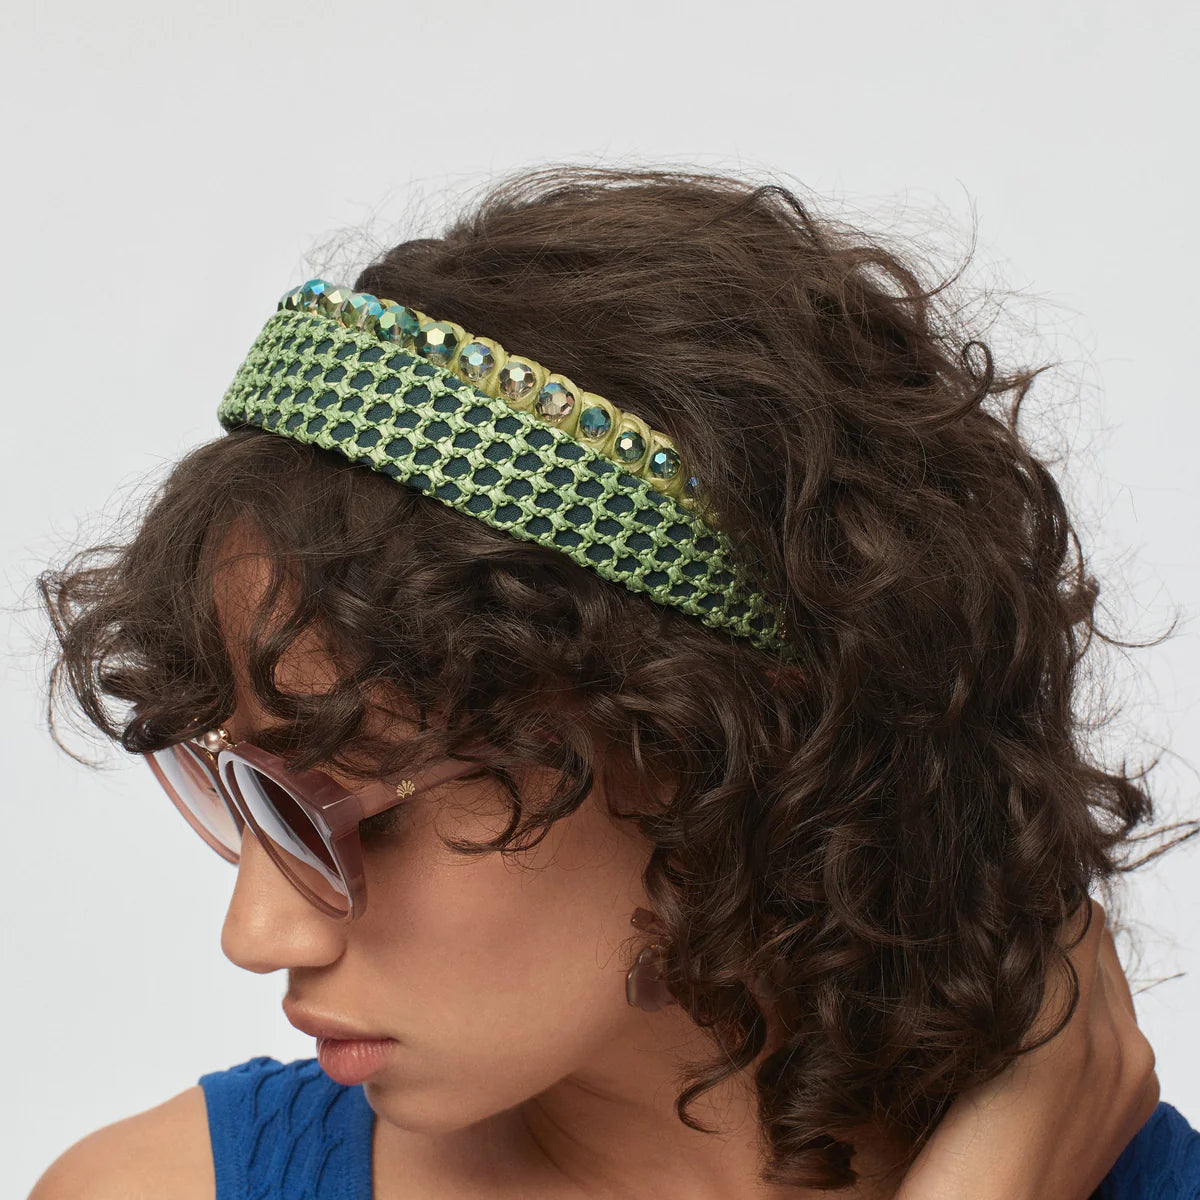  Housoutil Green Crystal Headband Braid Headband Hair